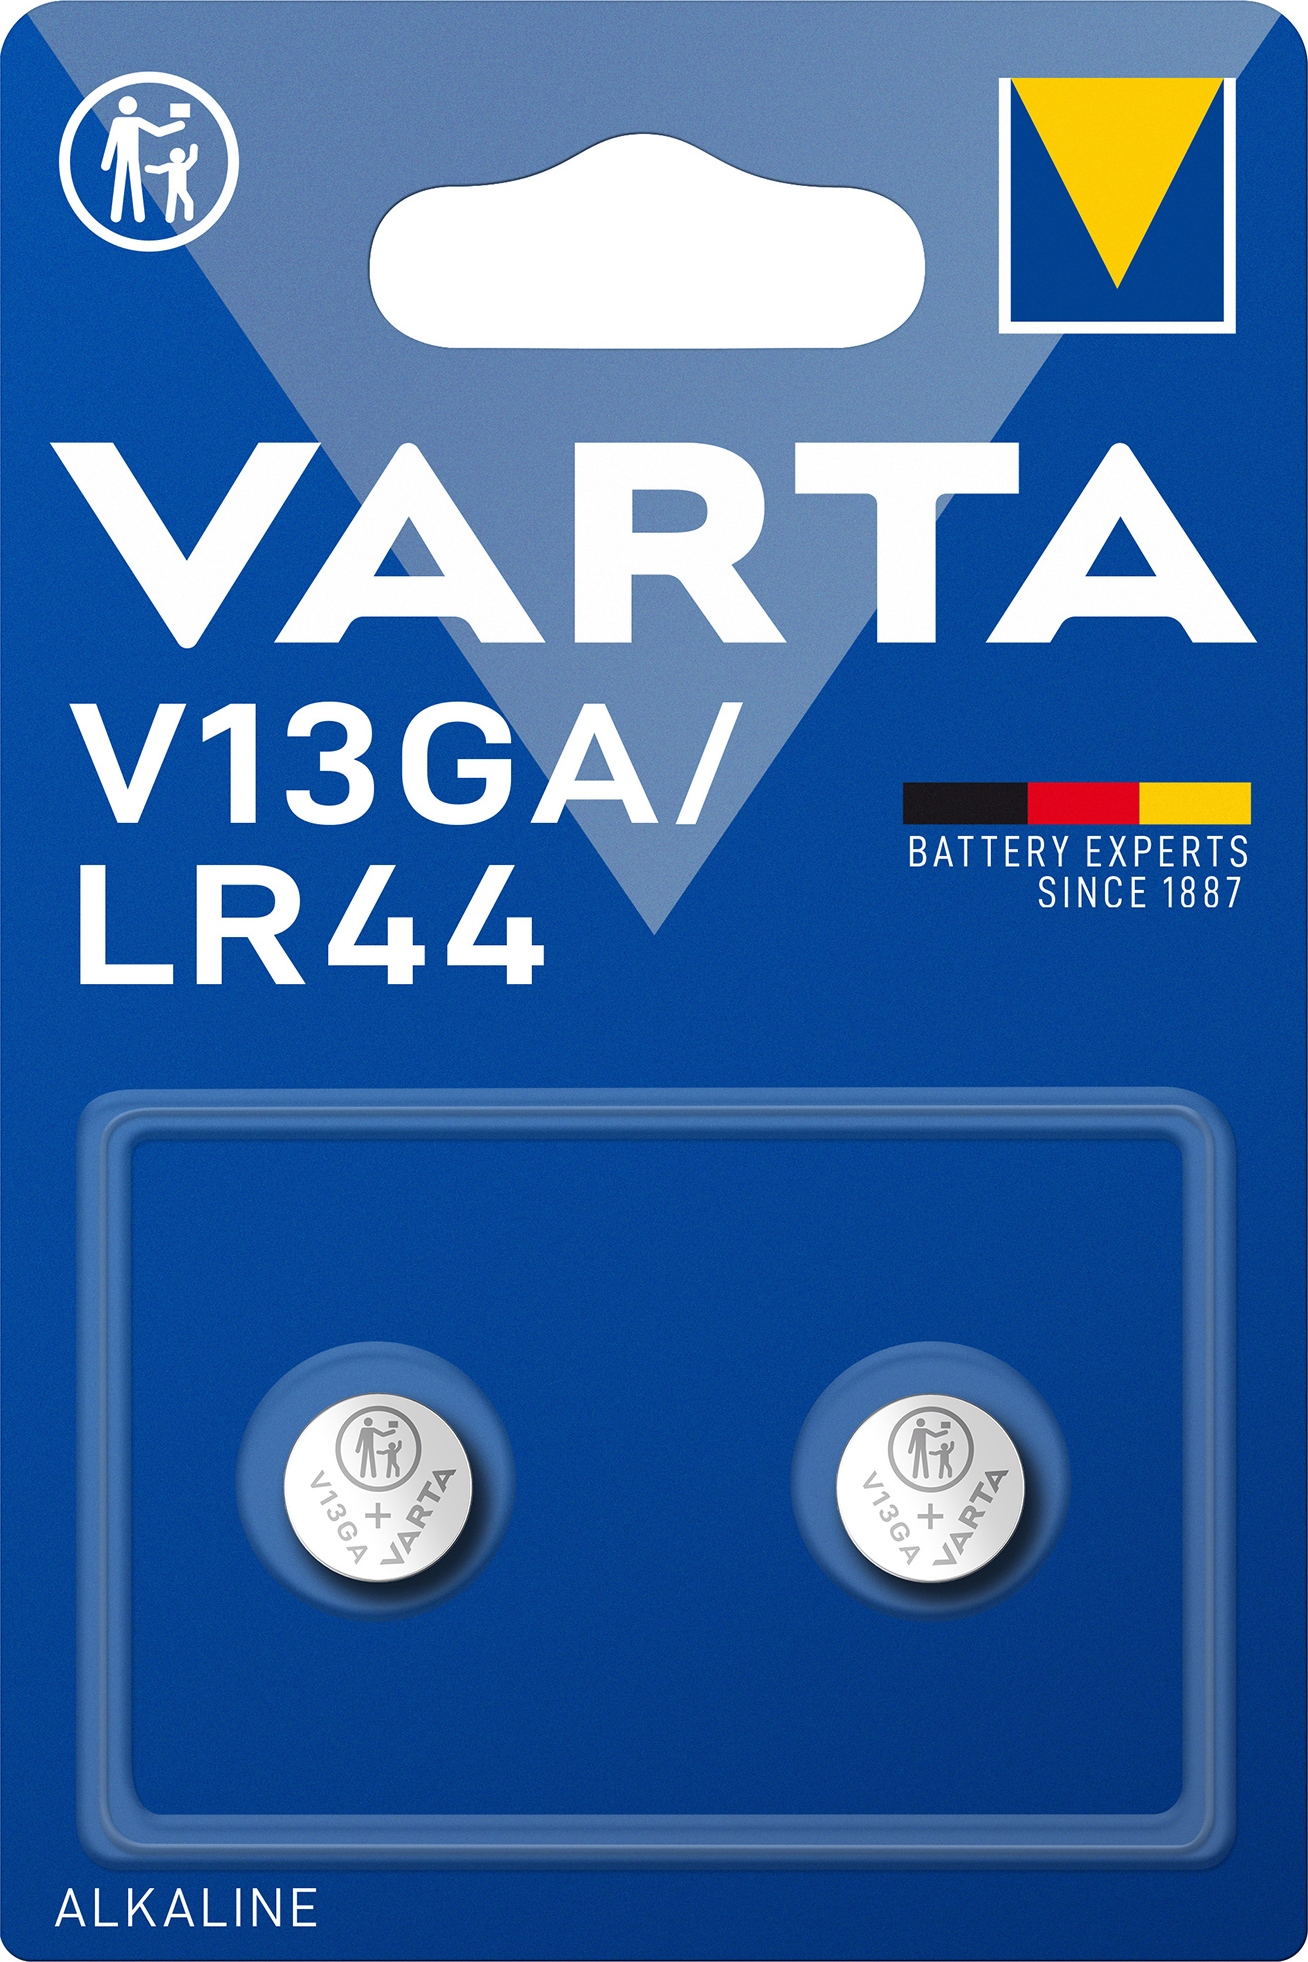 Varta V 13 Ga-batteri (2 stk)